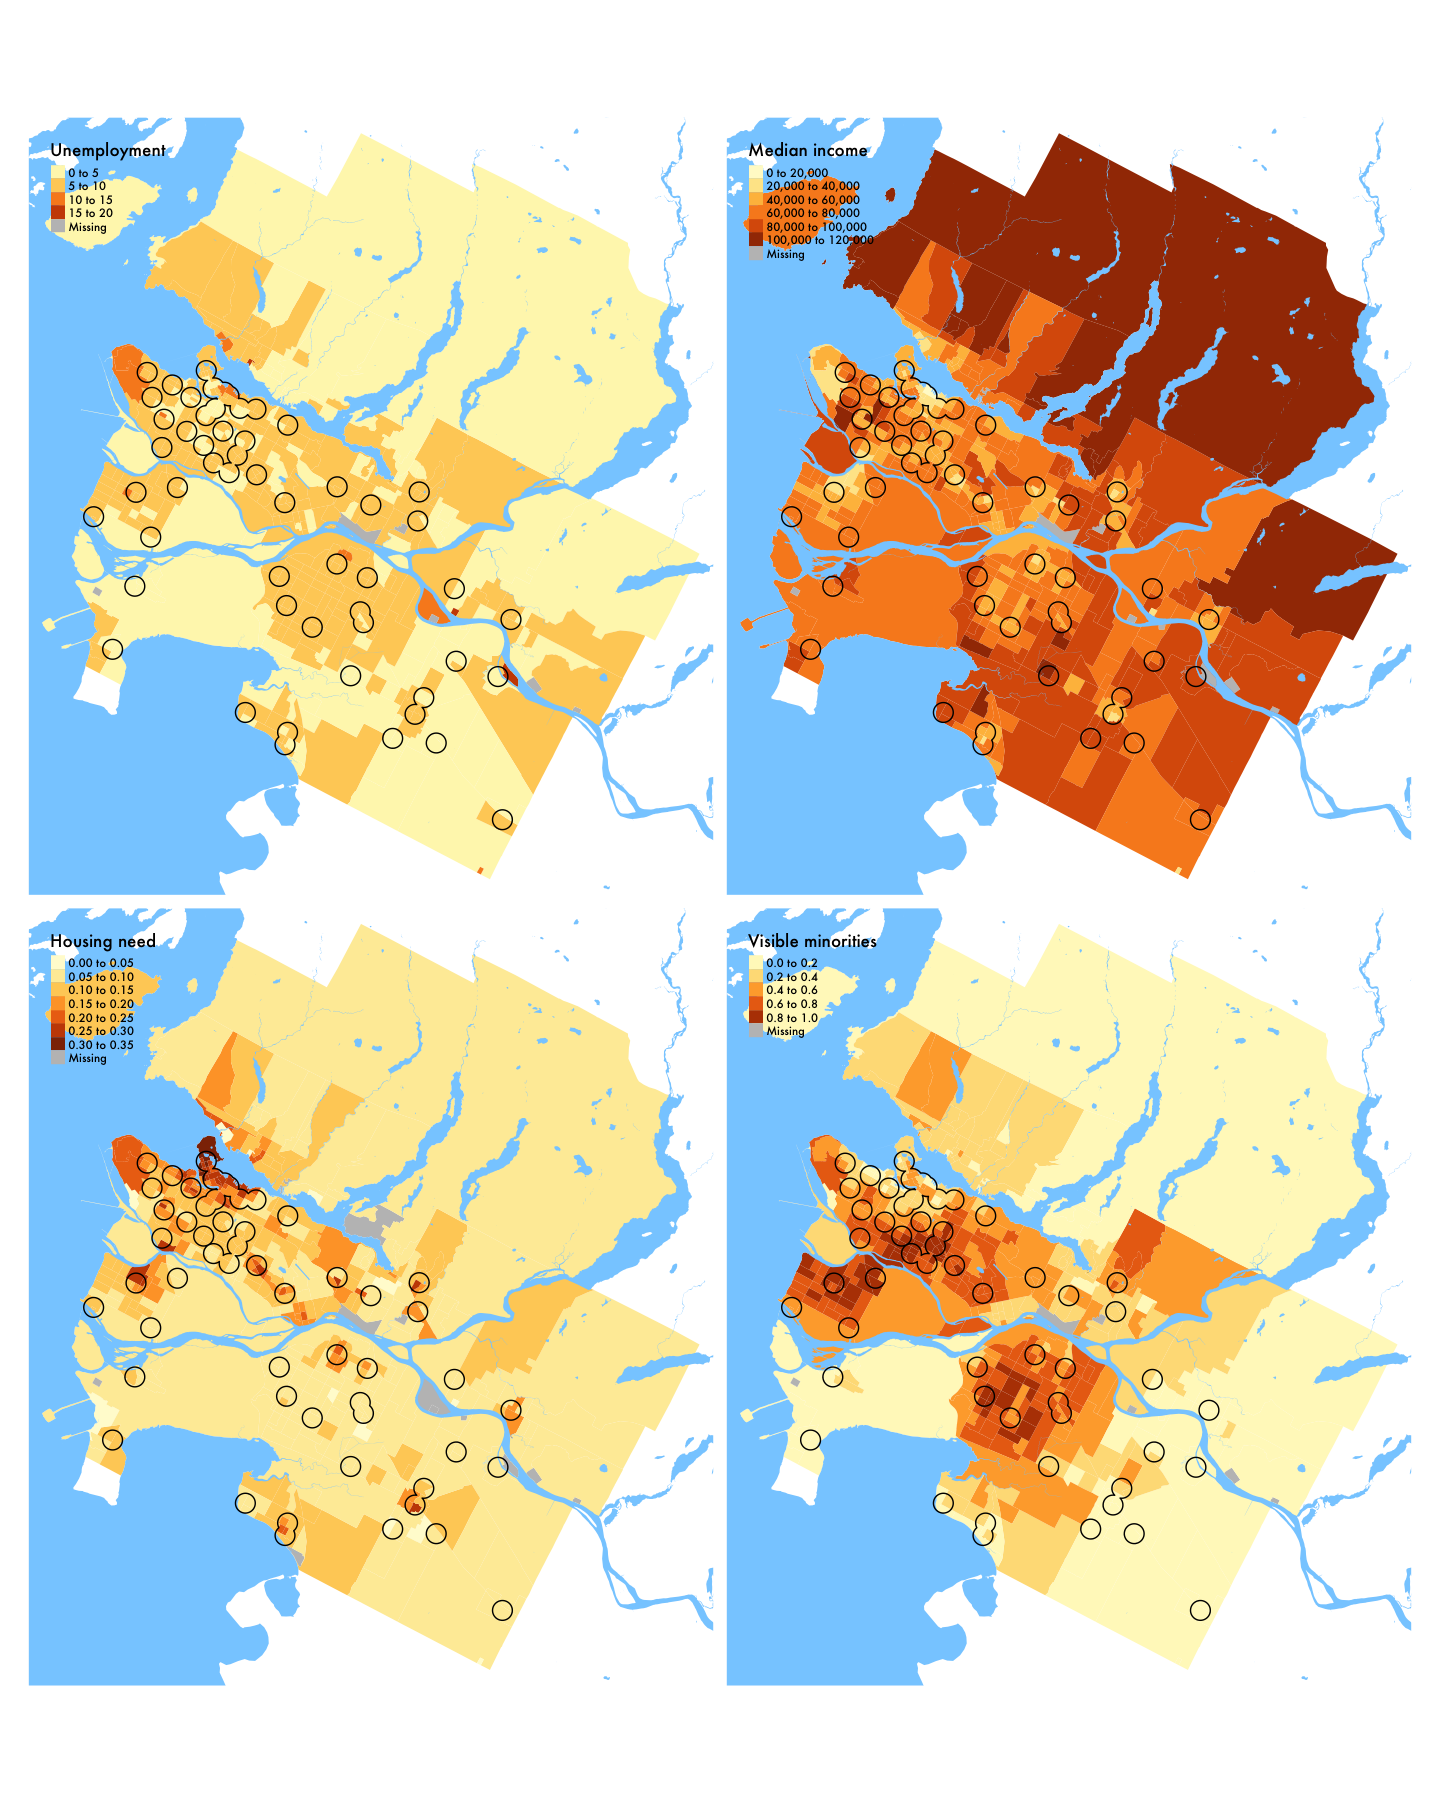 Demographic variables in Vancouver (region), 2016